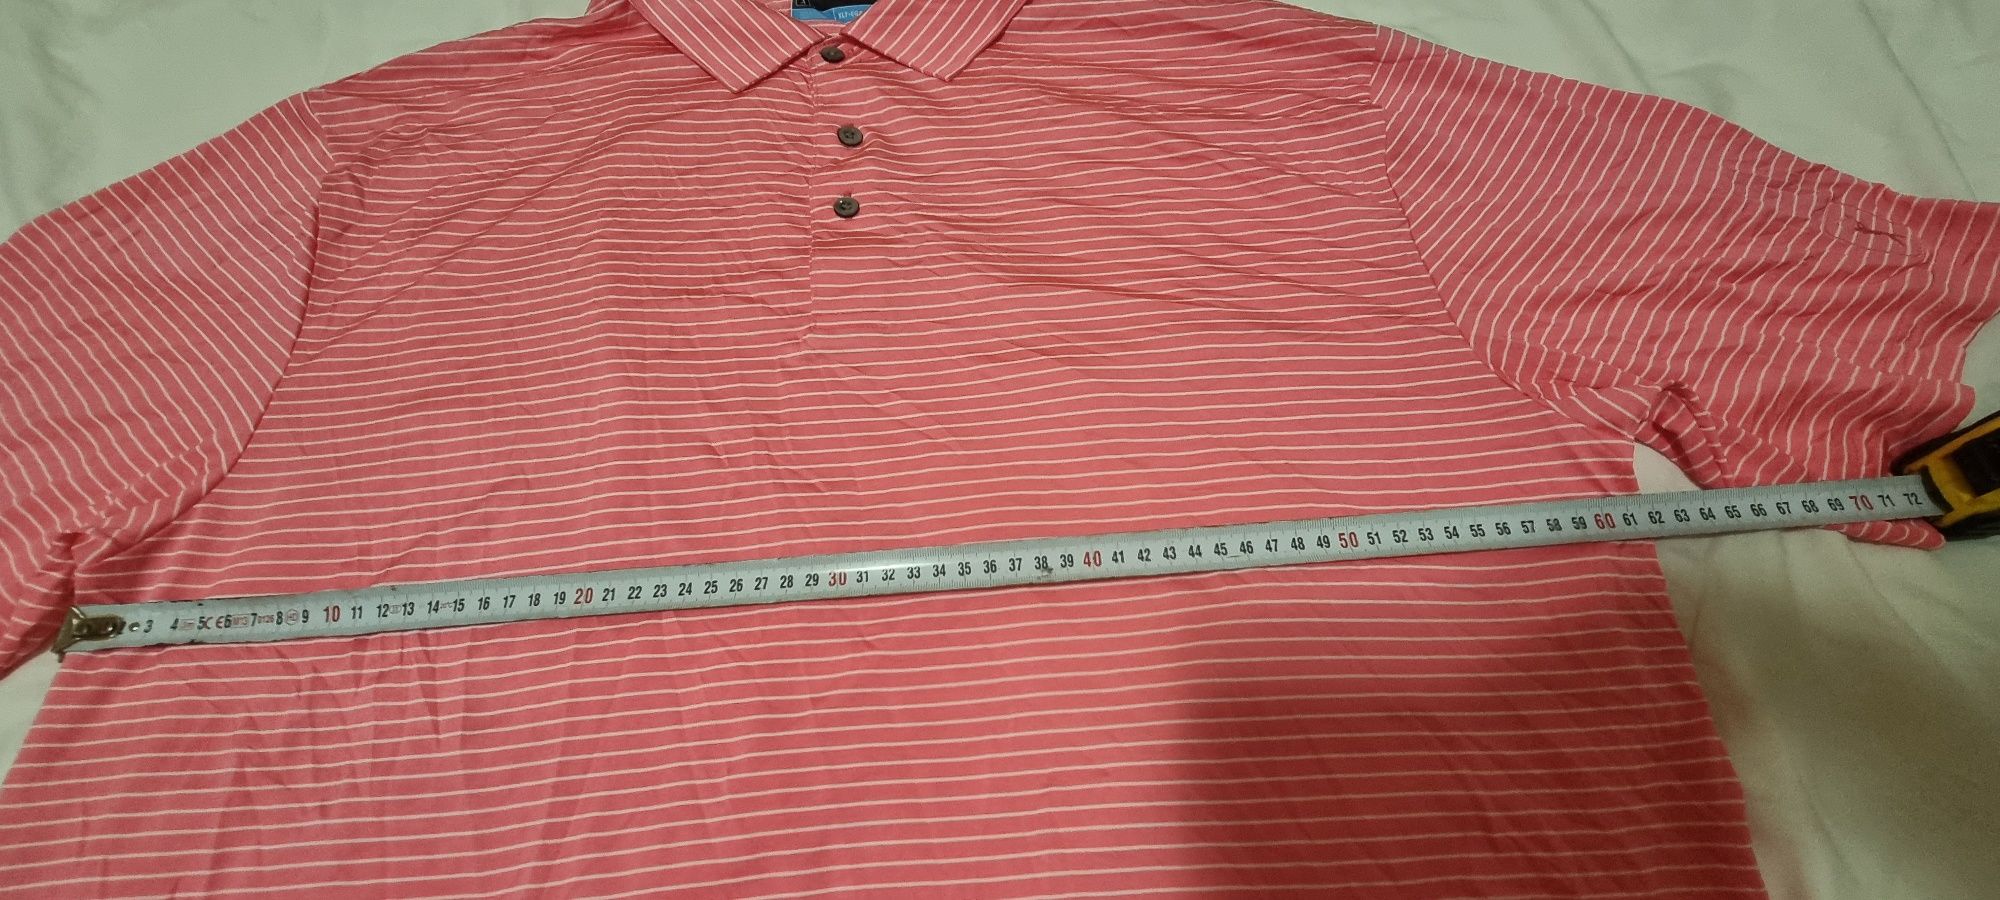 PGA TOUR розова мъжка тениска  XL